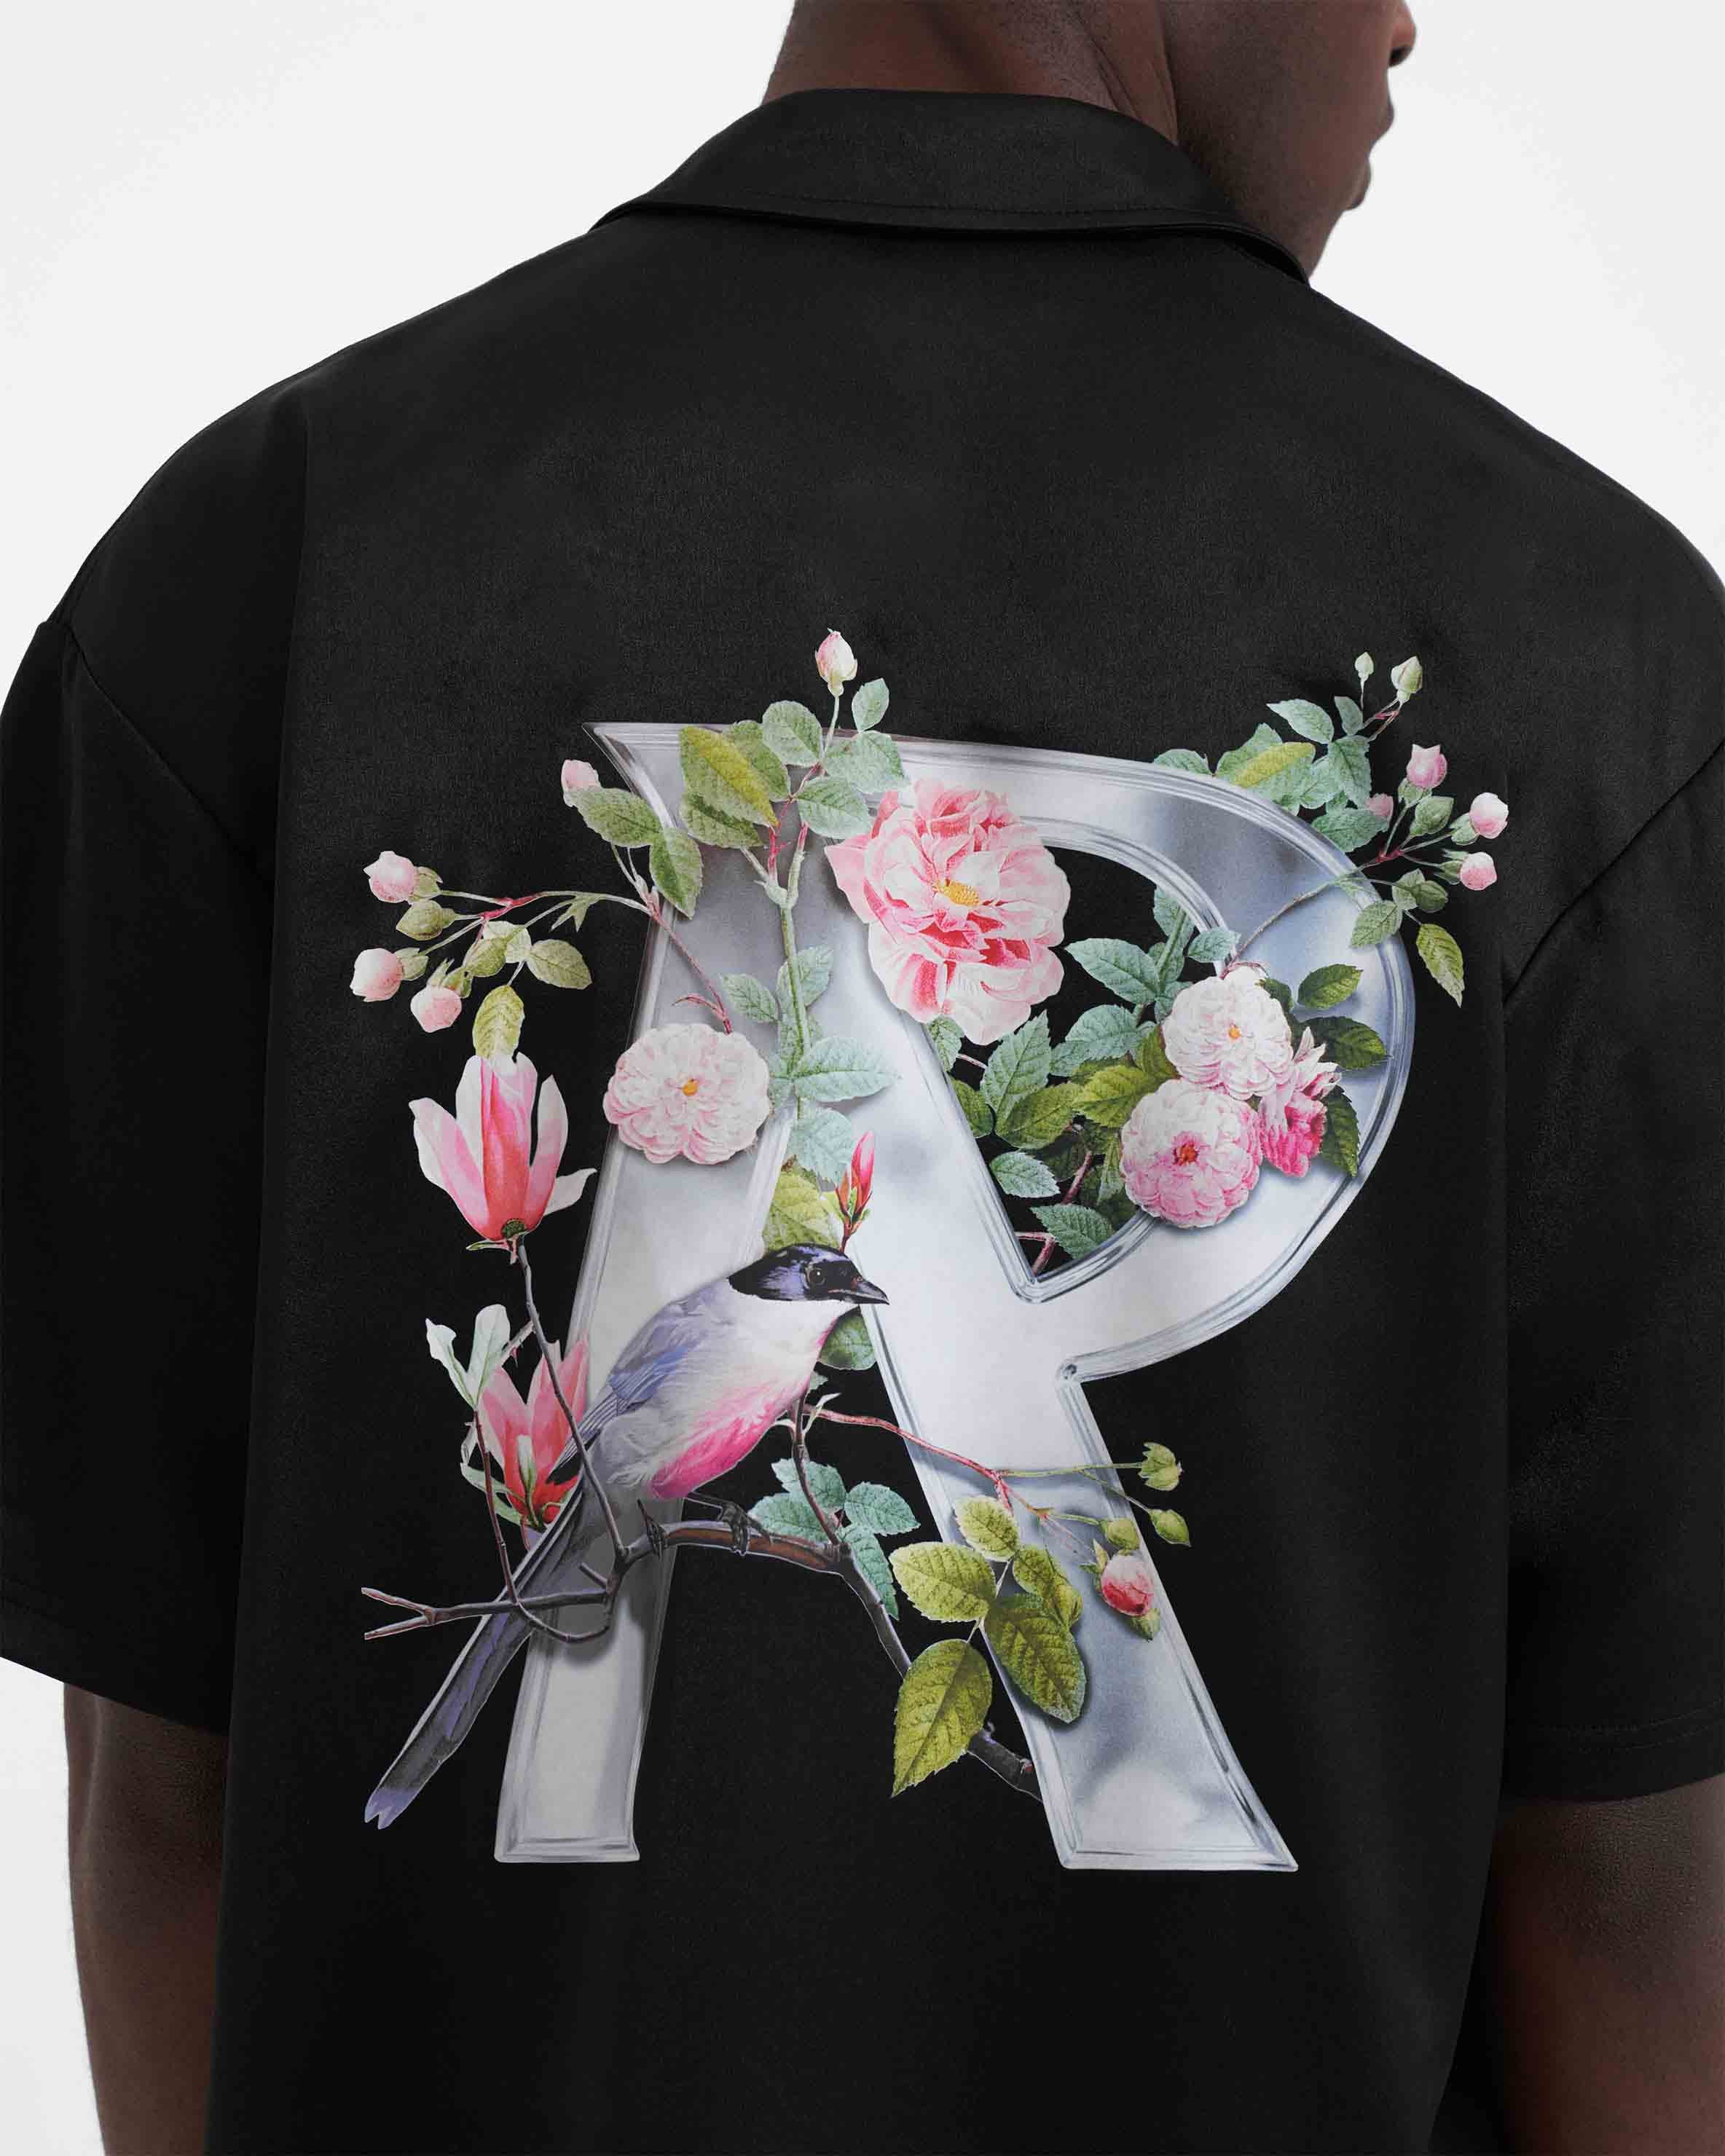 Floral Initial Shirt - Black